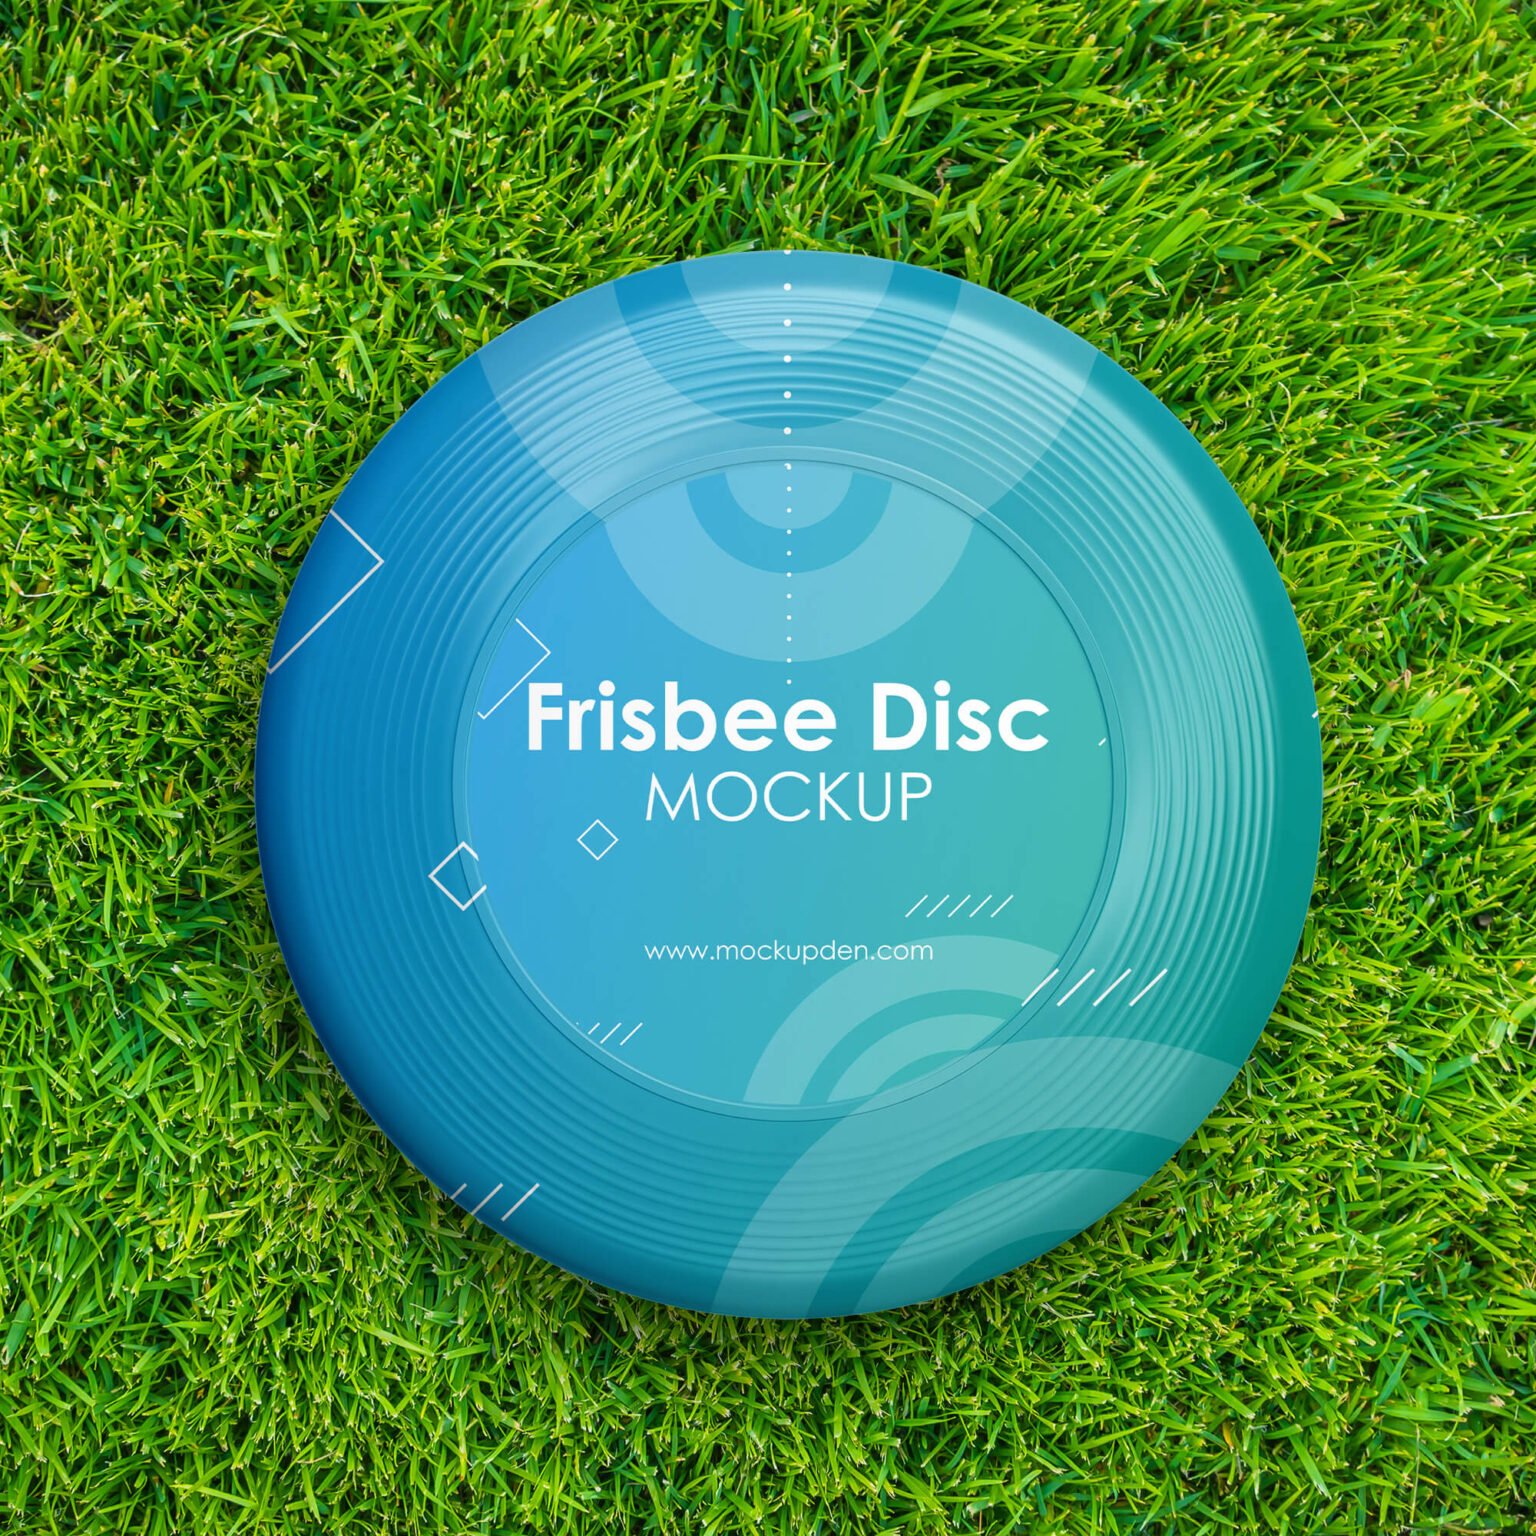 Free Frisbee Disc Mockup PSD Template - Mockup Den